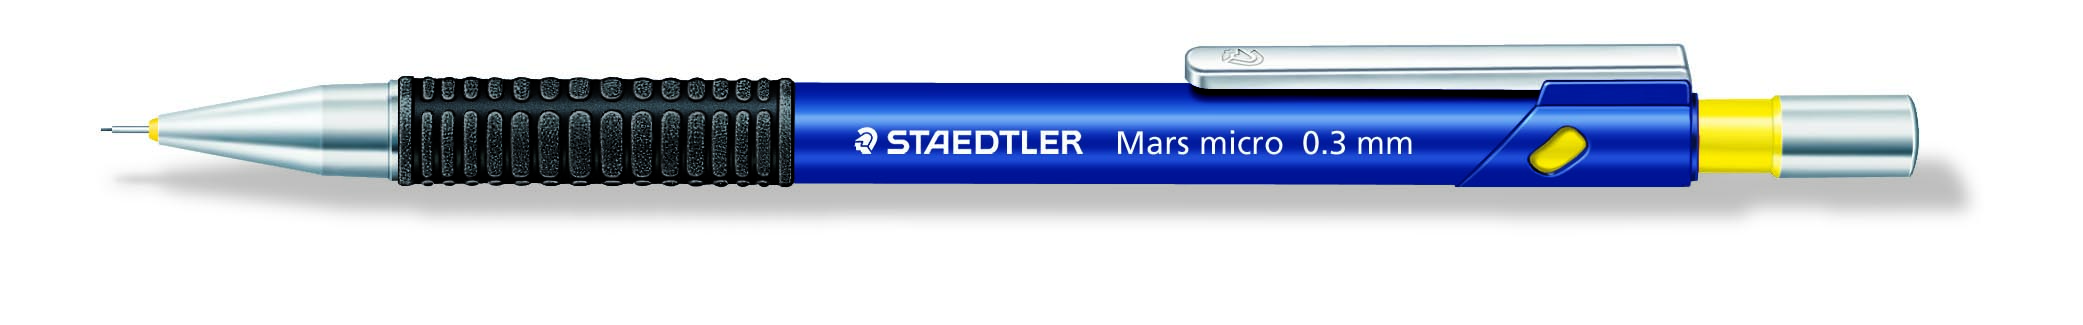 Stiftblyant Mars Micro 0,3mm bl, Staedtler 775 03,10stk